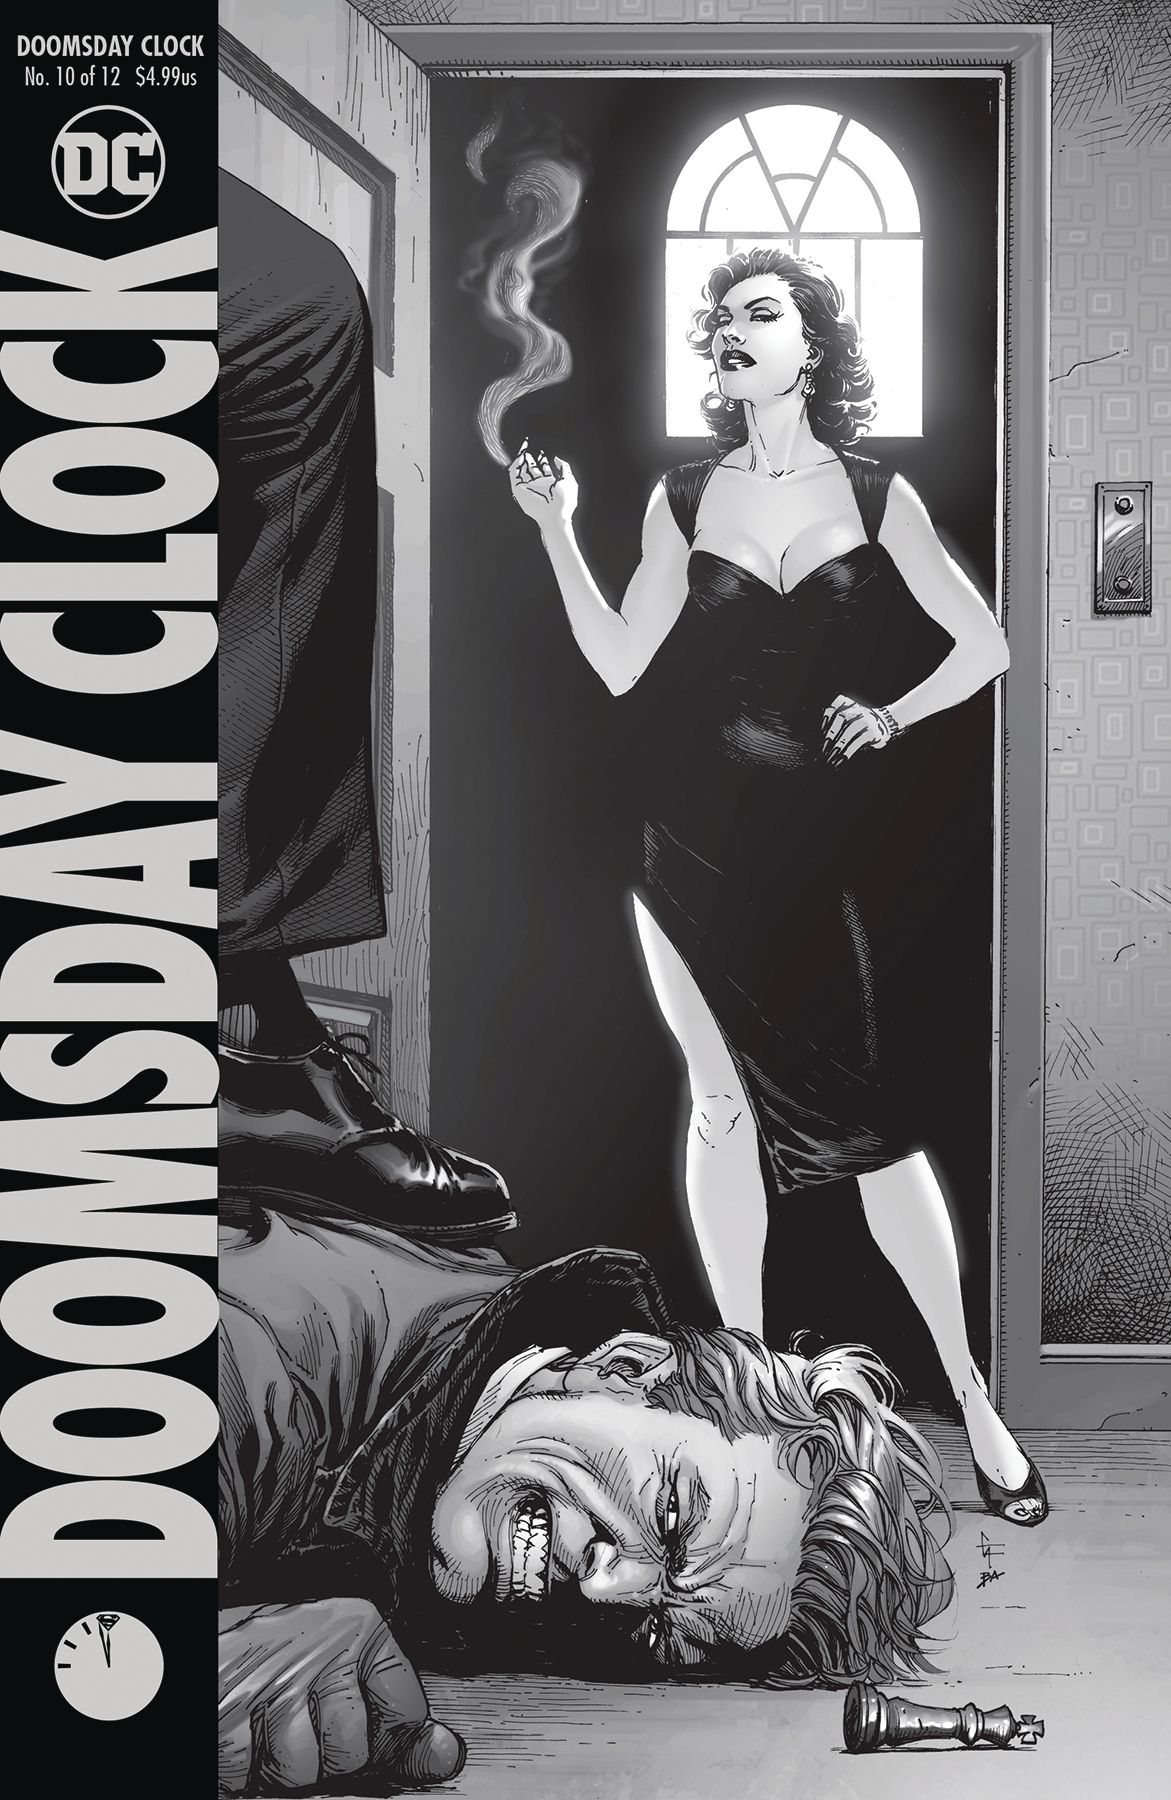 Doomsday Clock #10 Comic